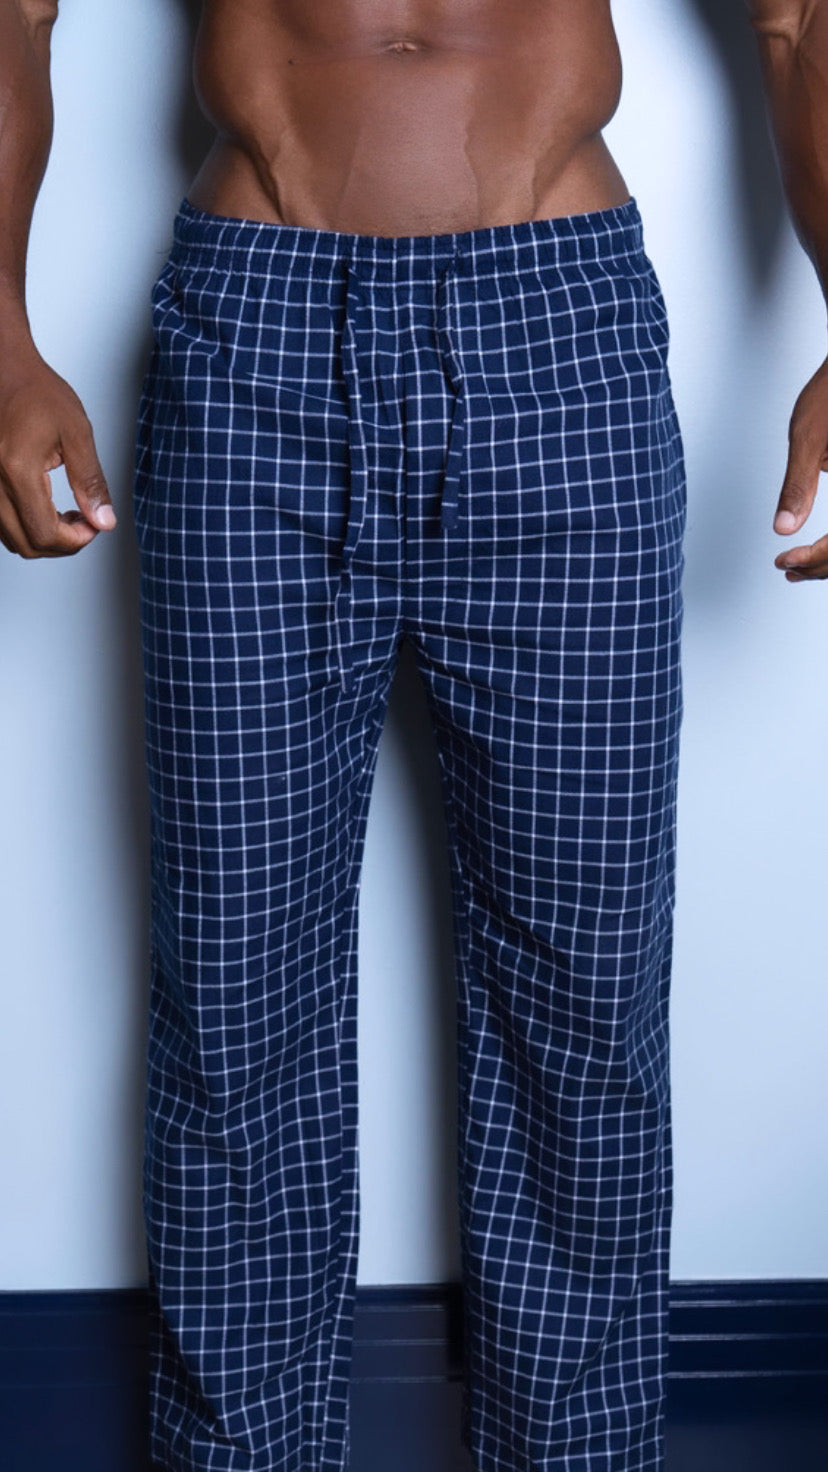 Light Blue Plaid Pajama Pants for Men, Comfortable Mens Lounge